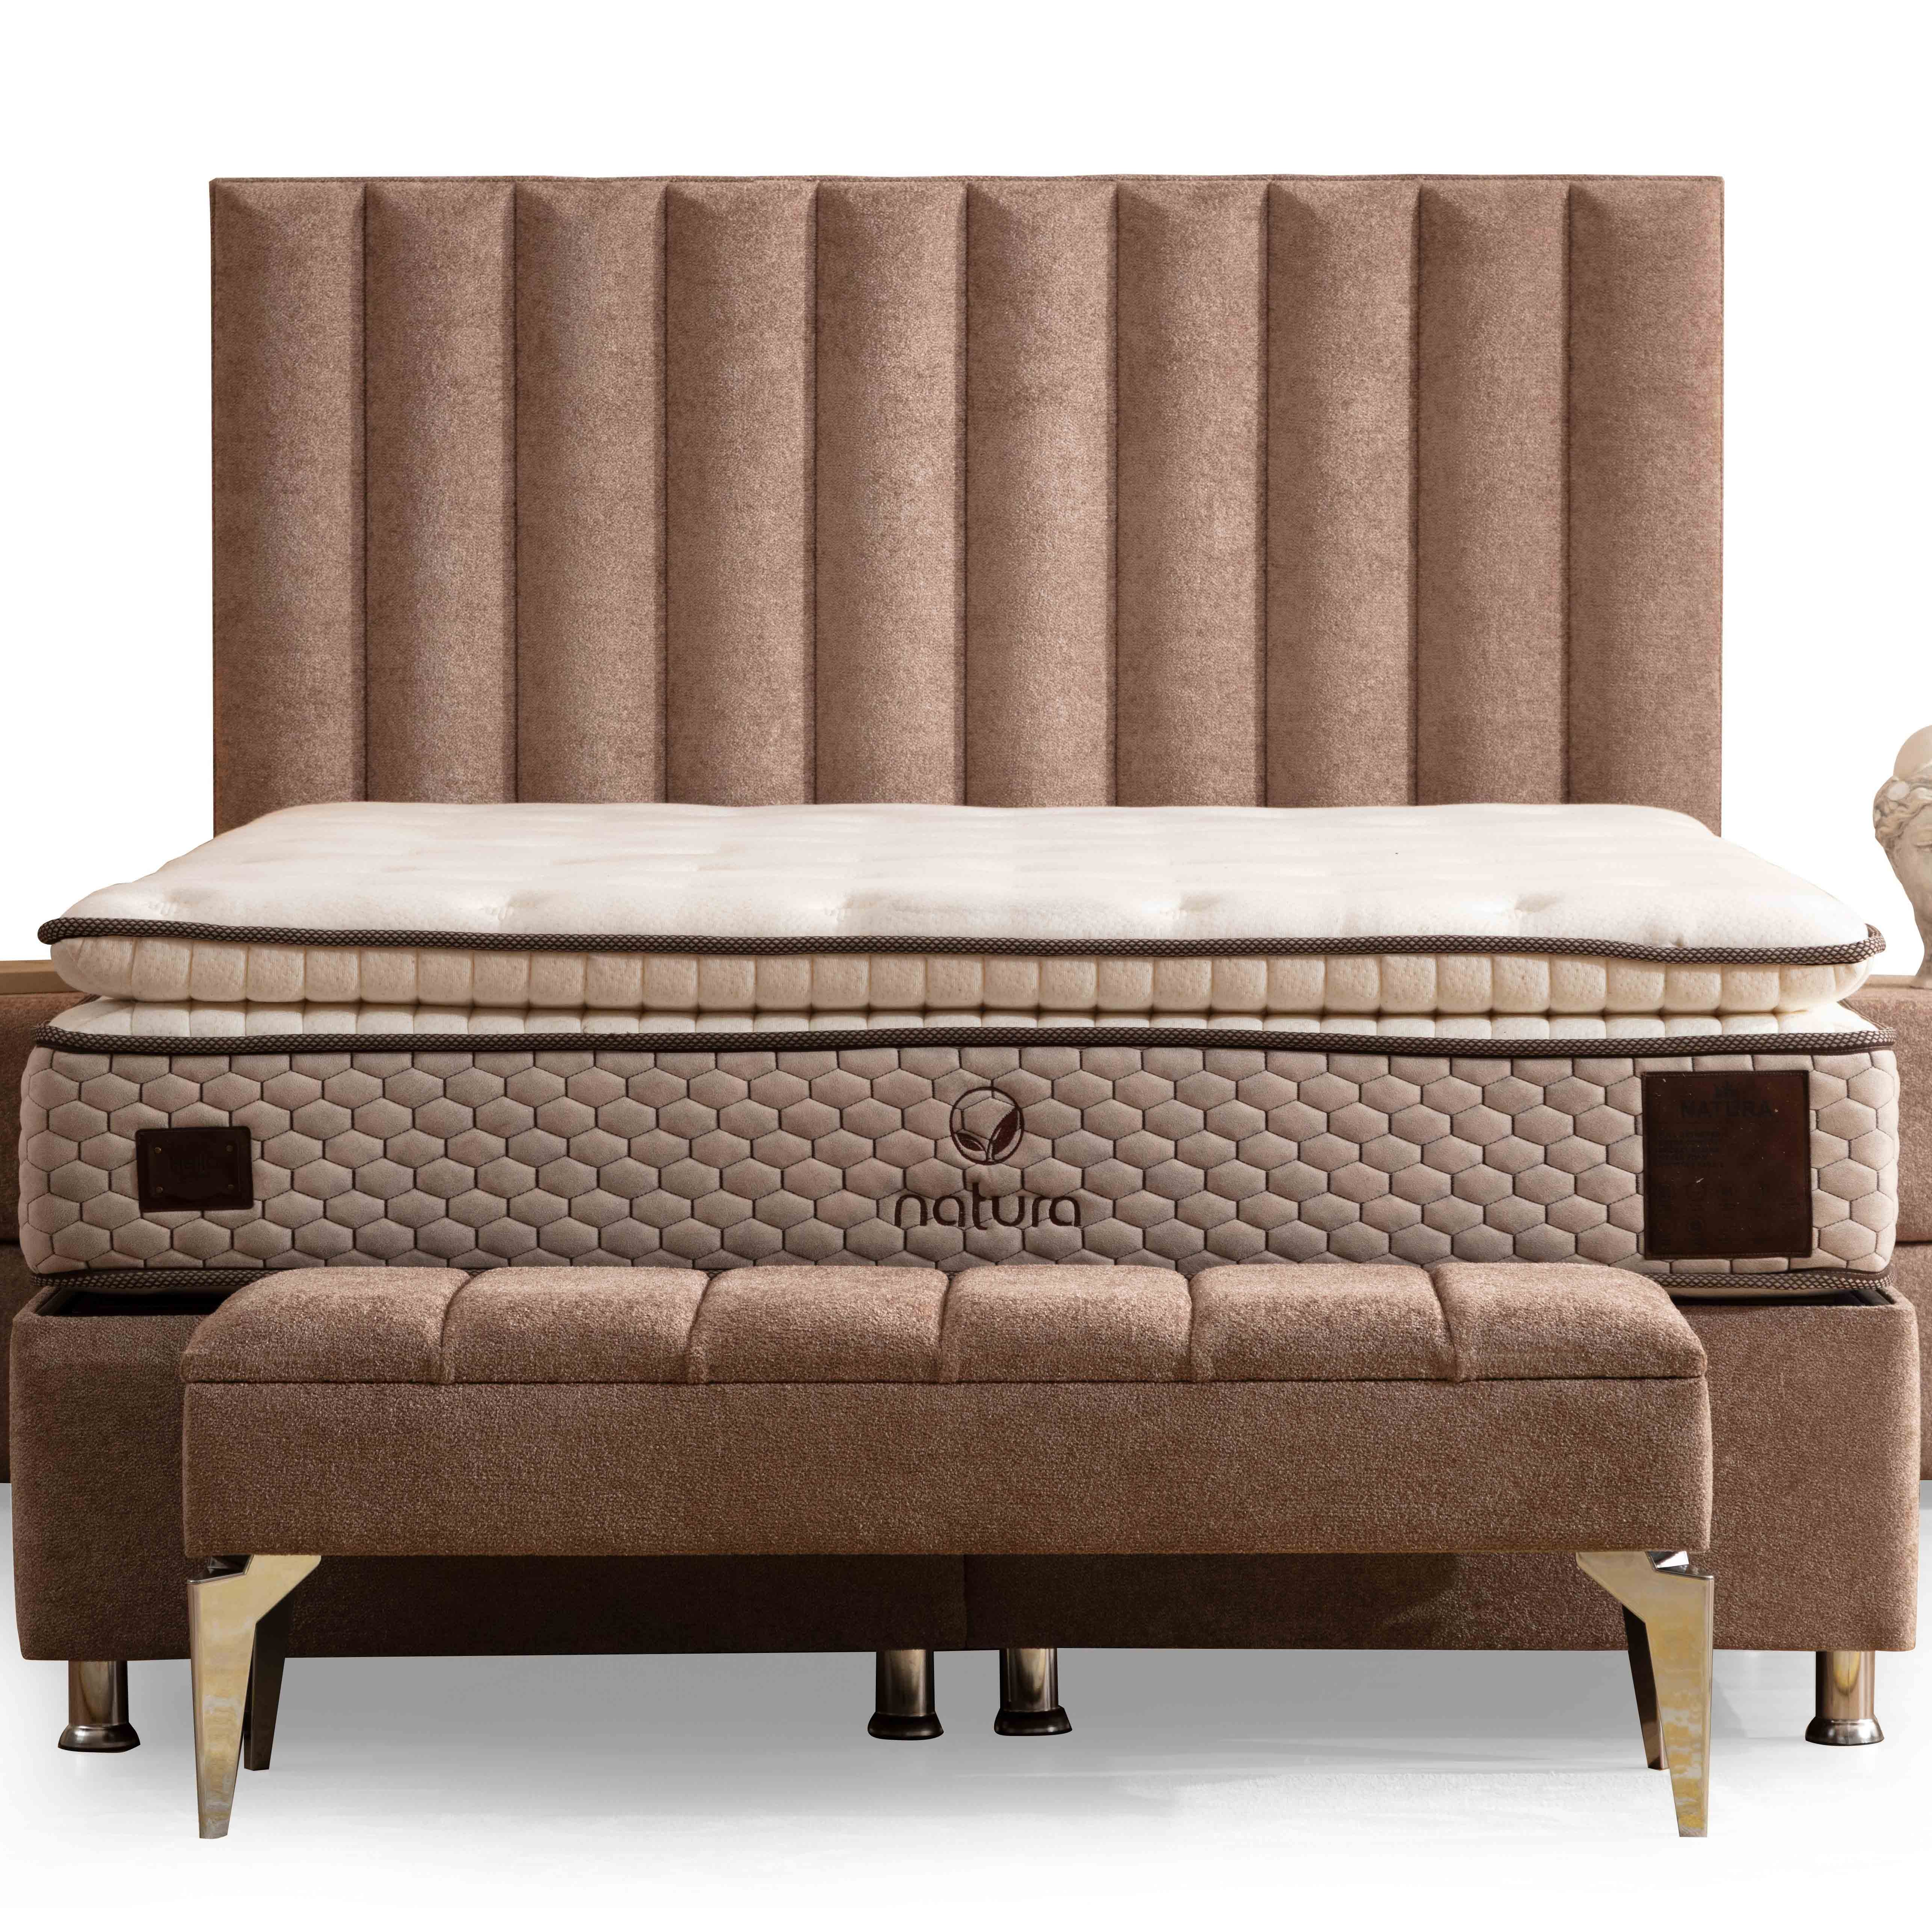 Nice Bed With Storage 120x200 cm